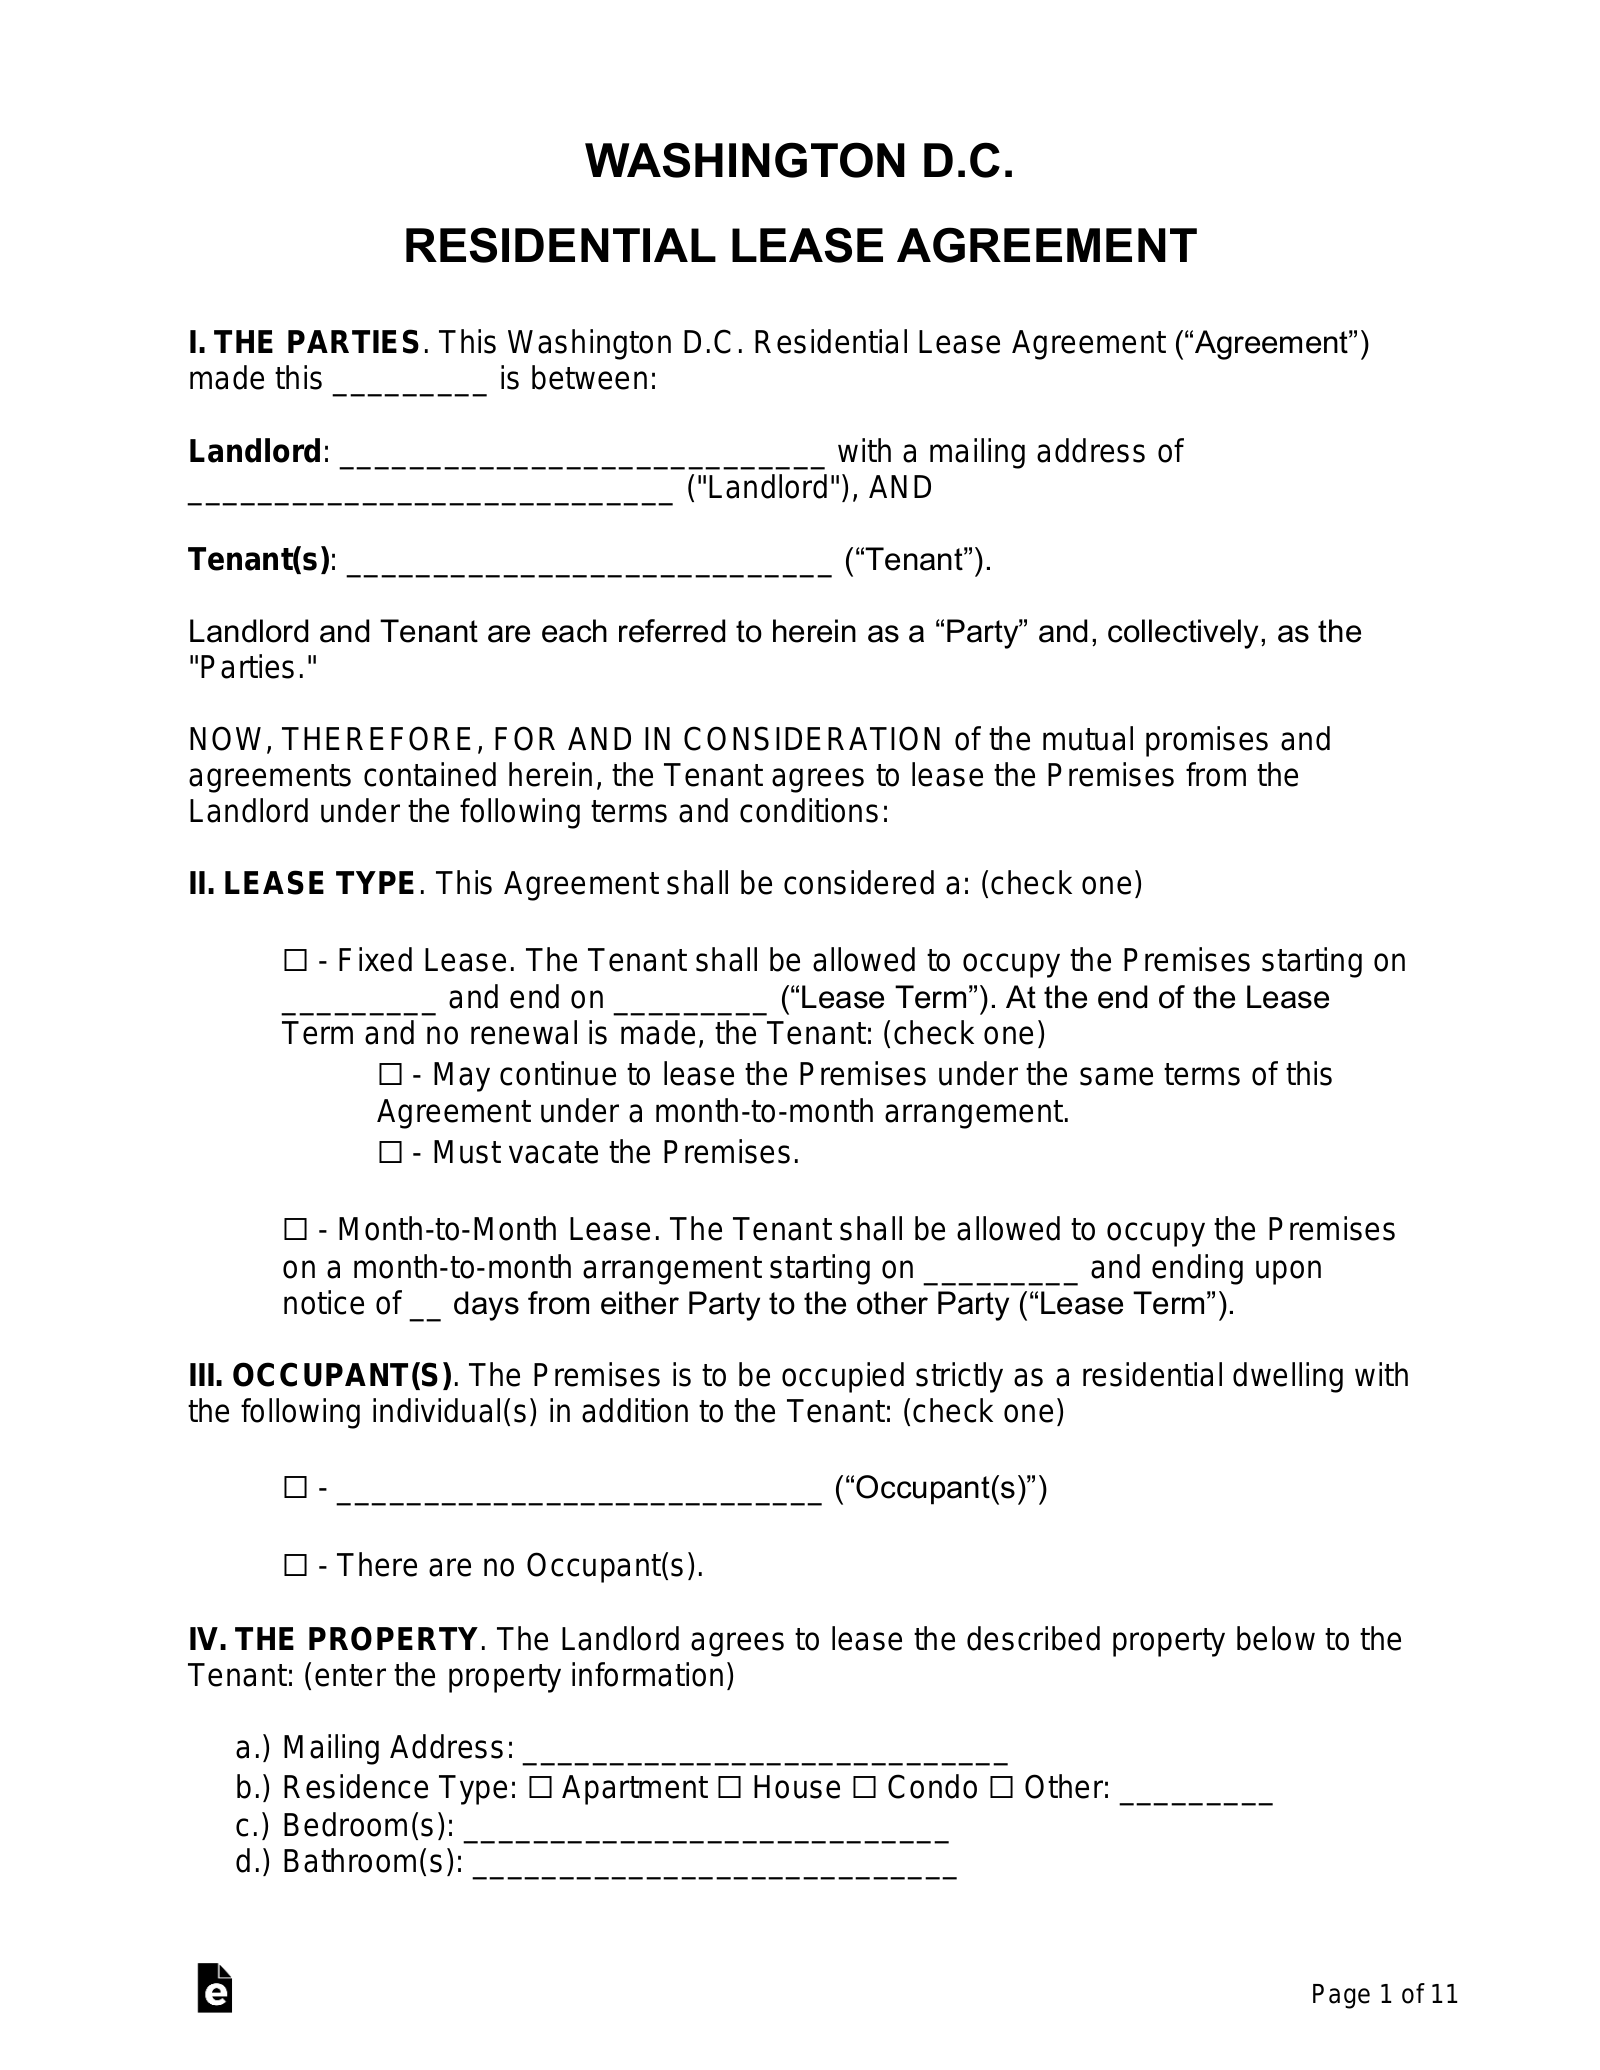 Washington D.C. Lease Agreement Templates (6)